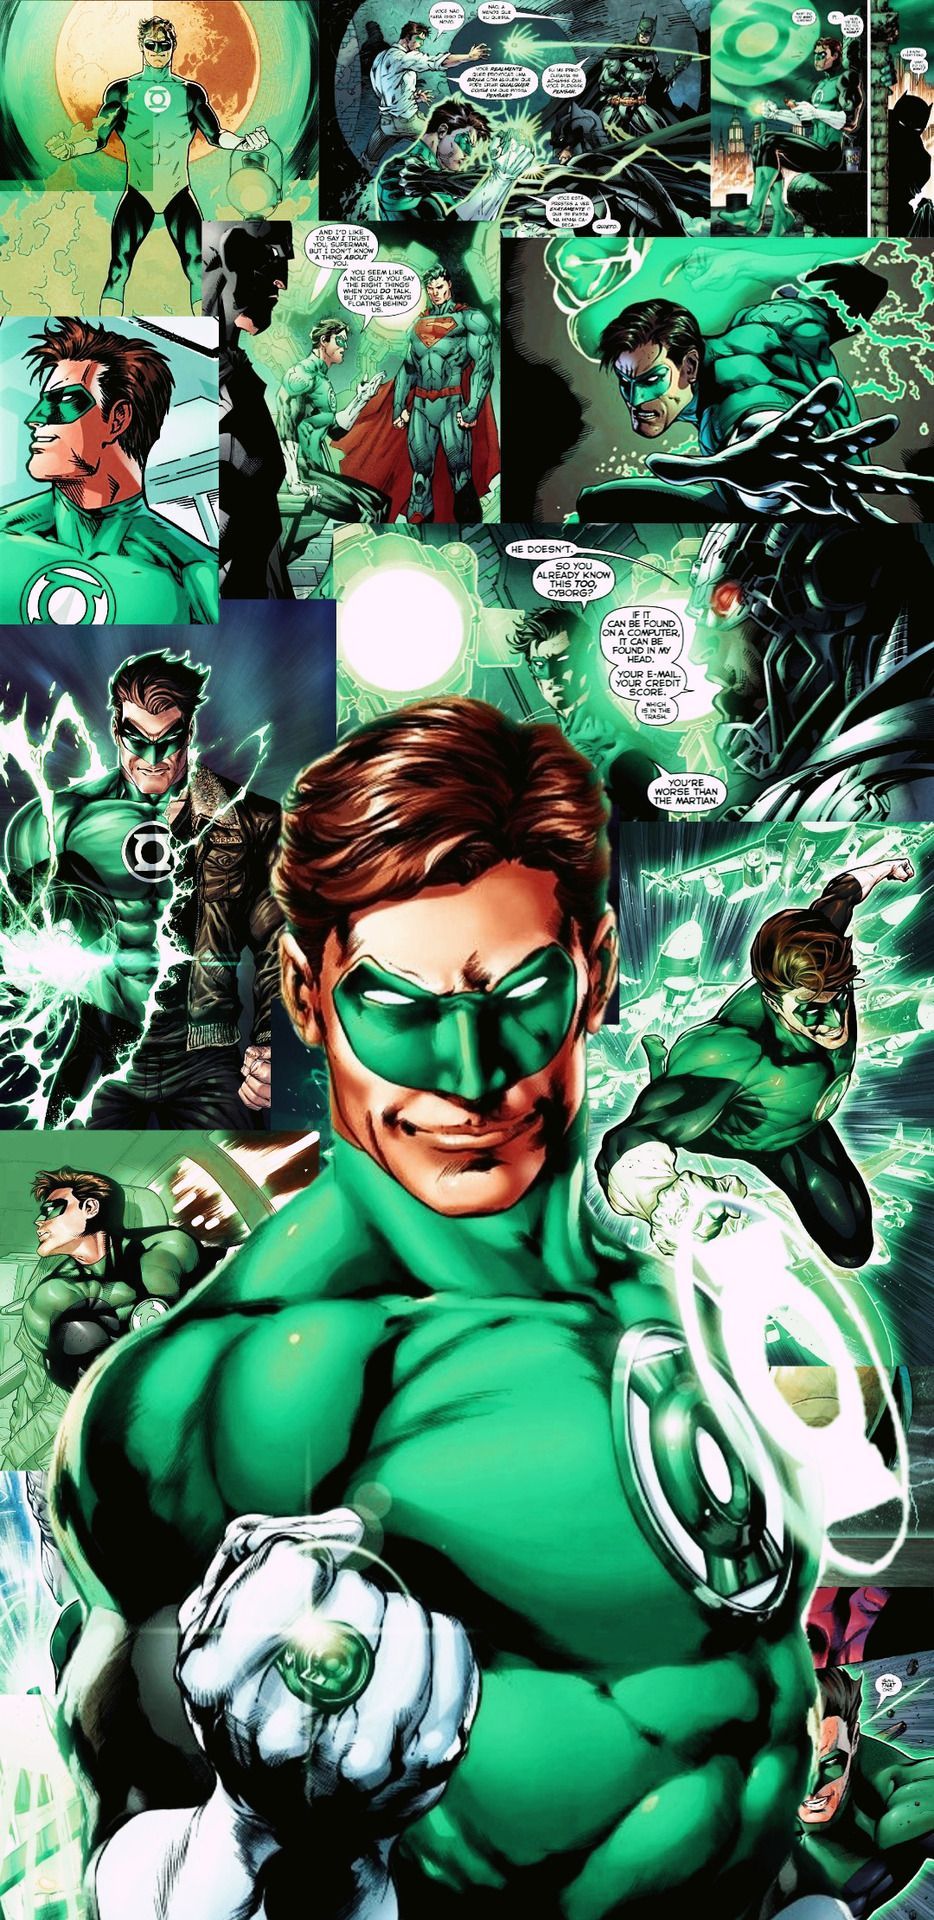 Green Lantern Corps Phone Wallpaper: Hal Jordan. Green lantern comics, Green lantern hal jordan, Green lantern corps